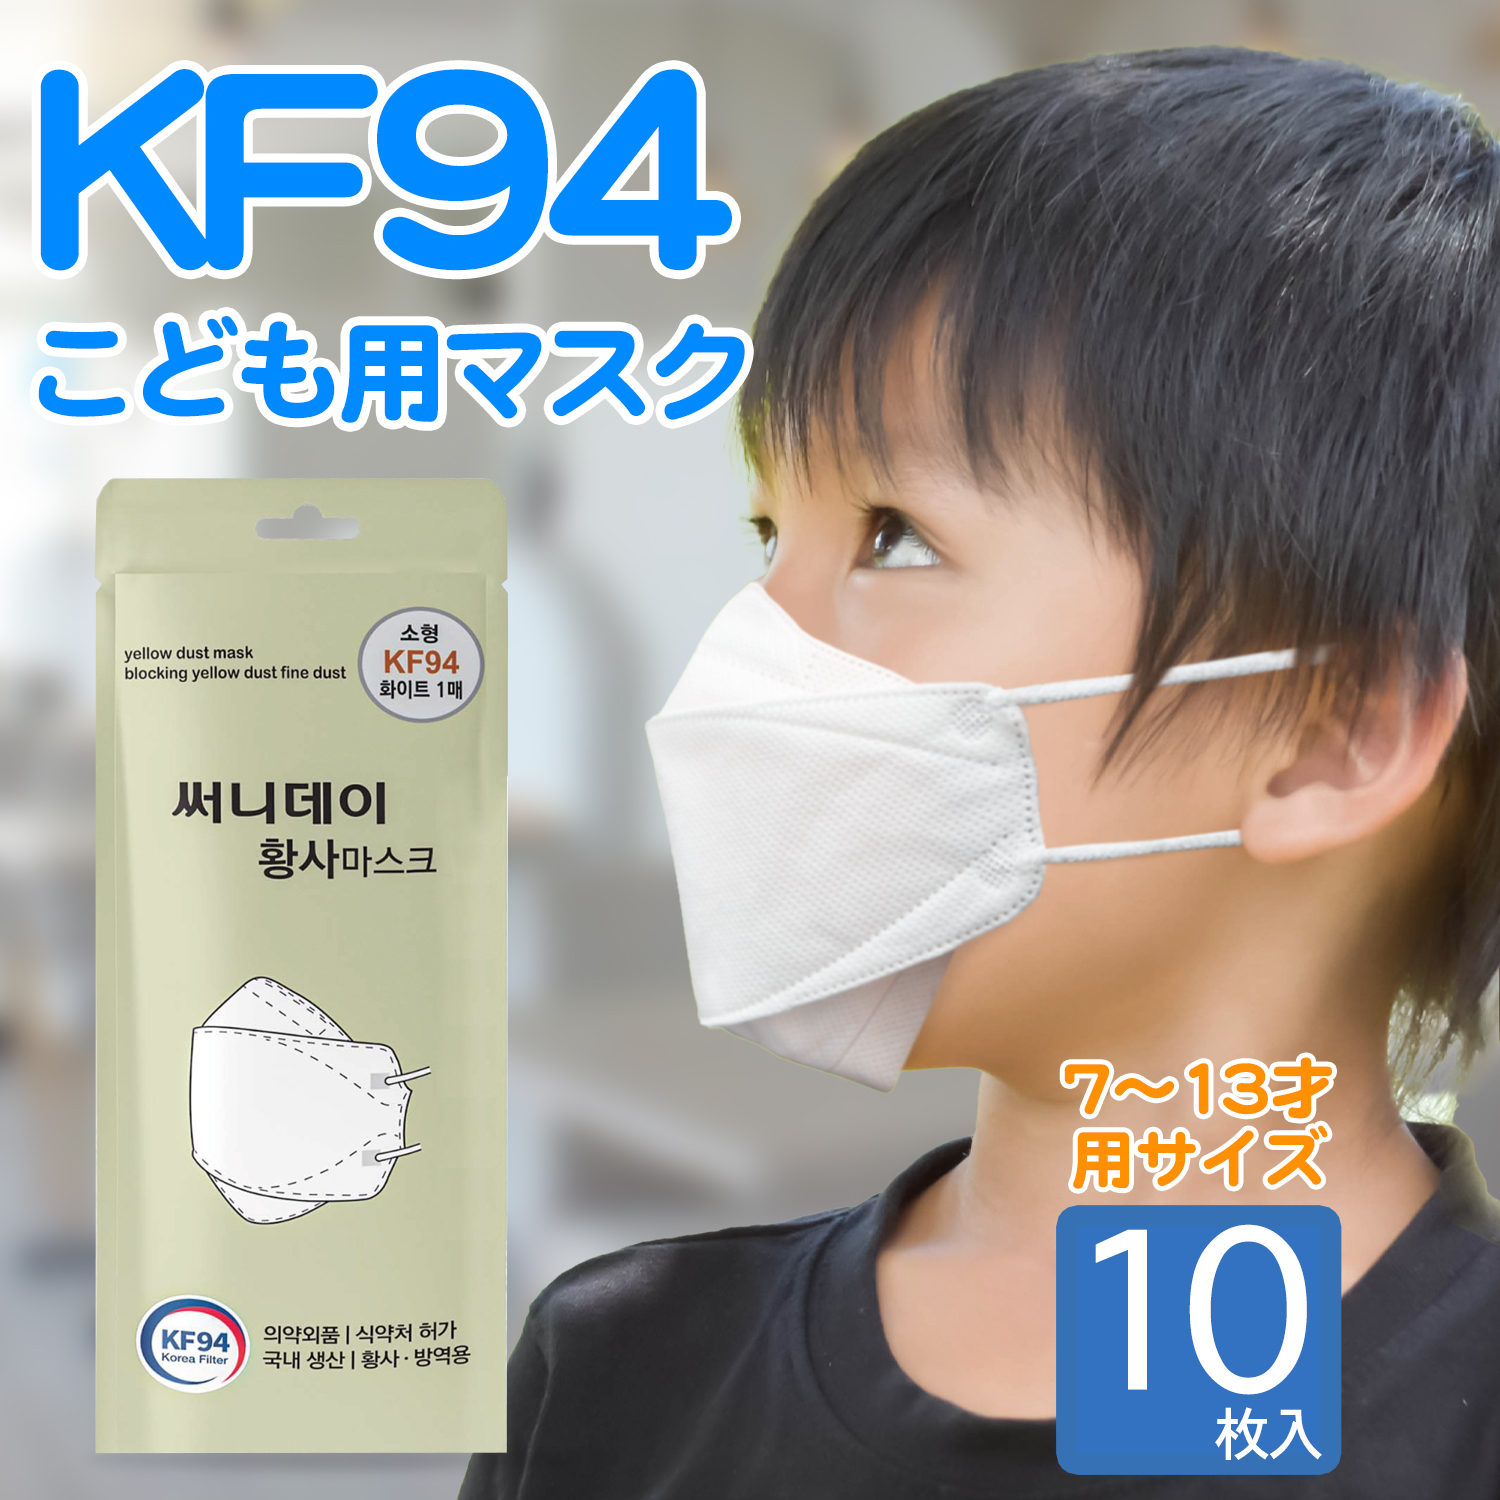 Kf94認証 子ども用プレミアムマスク フィルター補集率 密着性 医療用レベル を２月１１日から限定発売開始 株式会社アバンティのプレスリリース